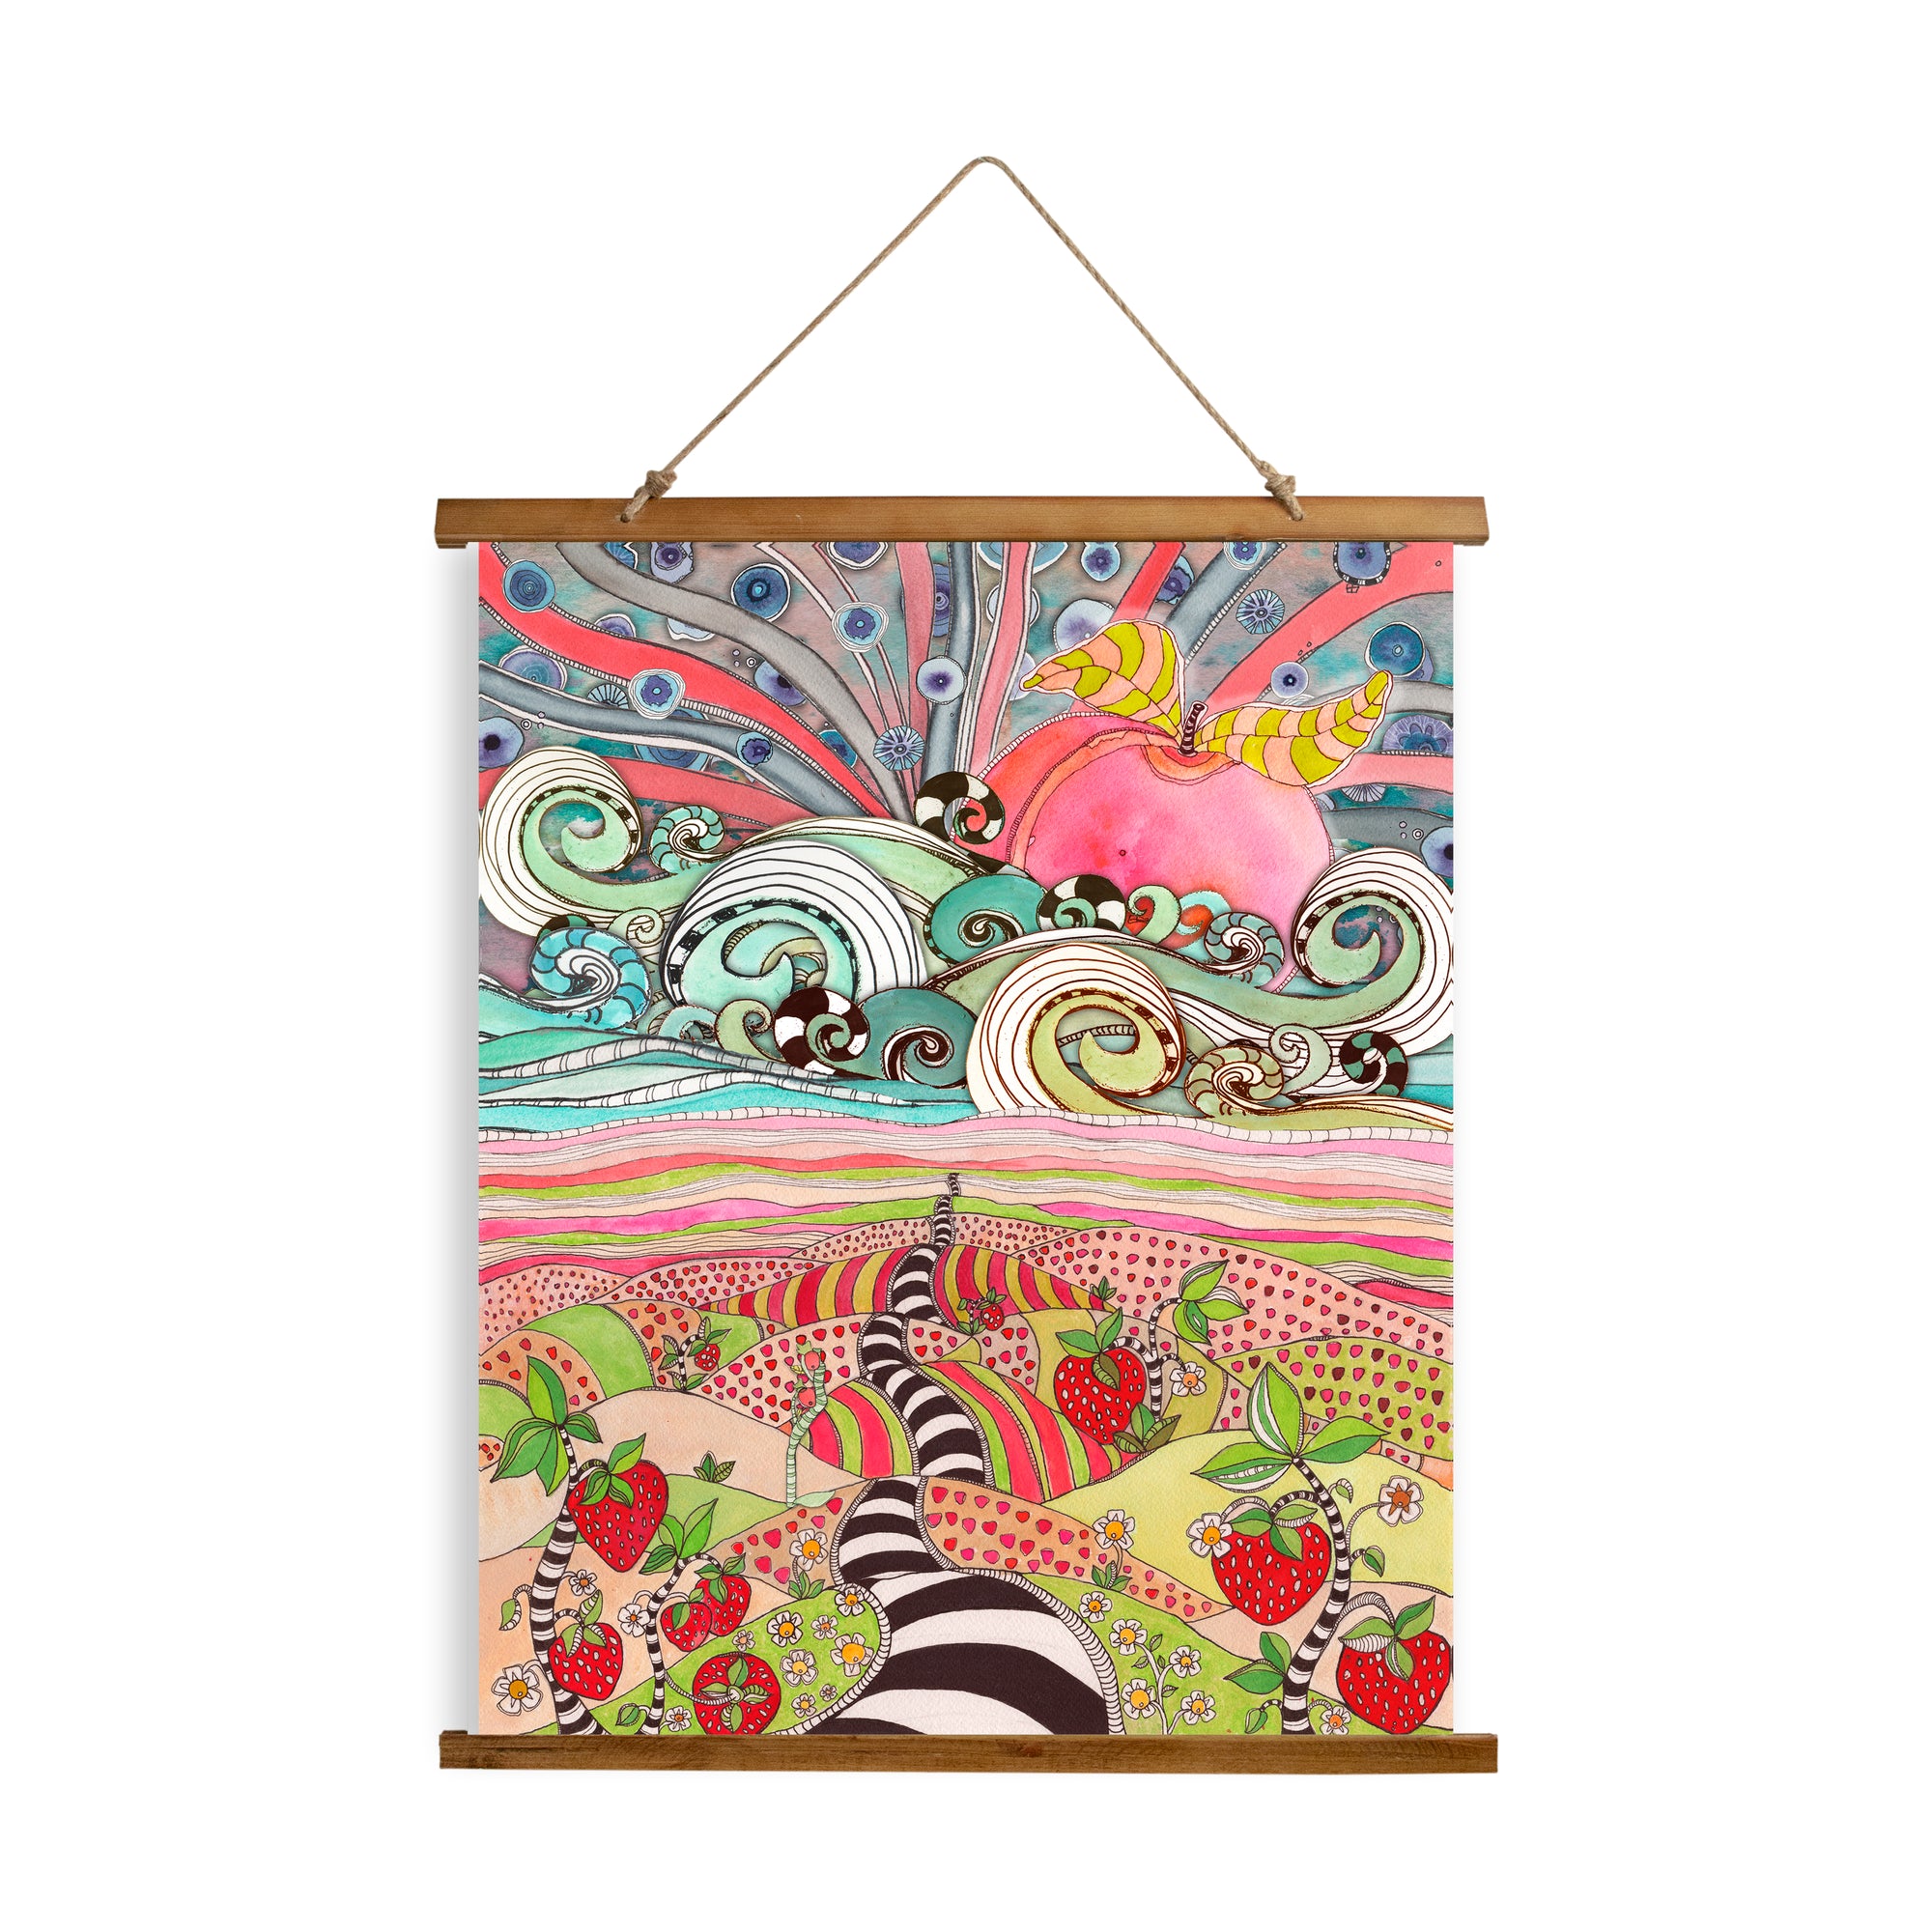 Whimsical Wood Slat Tapestry "Pink Sun Rising"